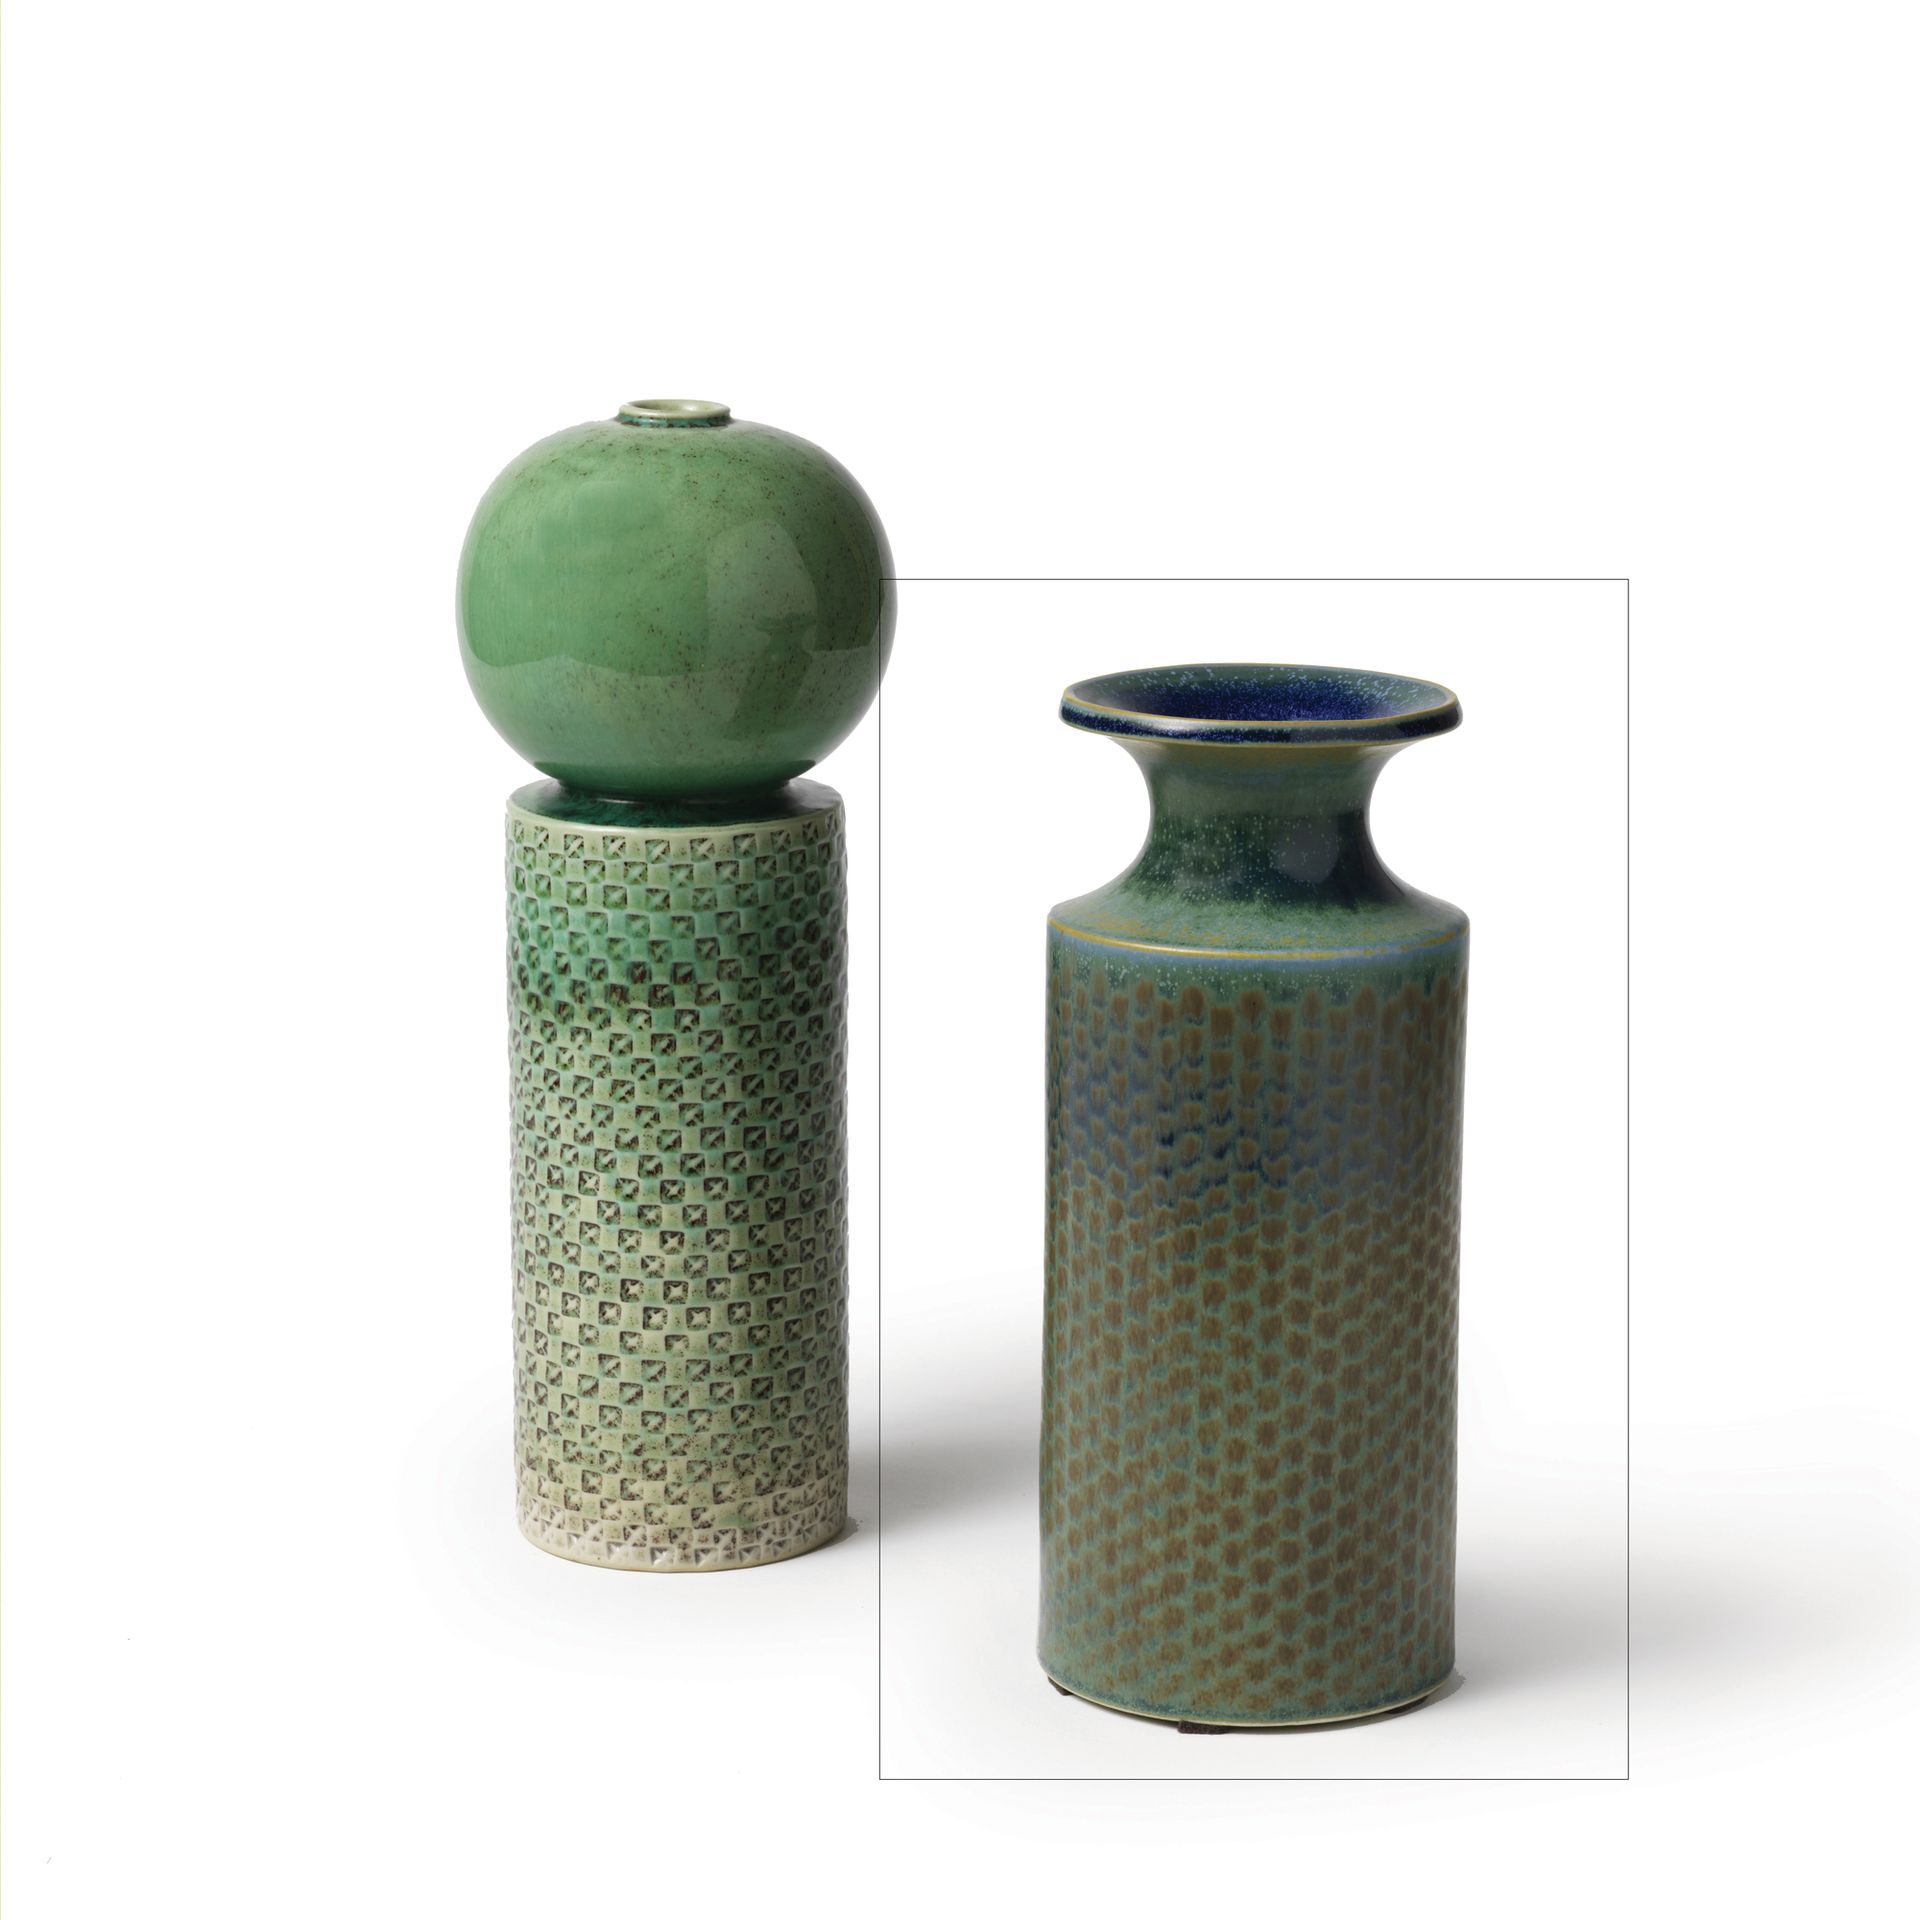 STIG LINDBERG (1916-1982) Vase cylindrique, vers 1950
Émail bleu et céladon
Manu&hellip;